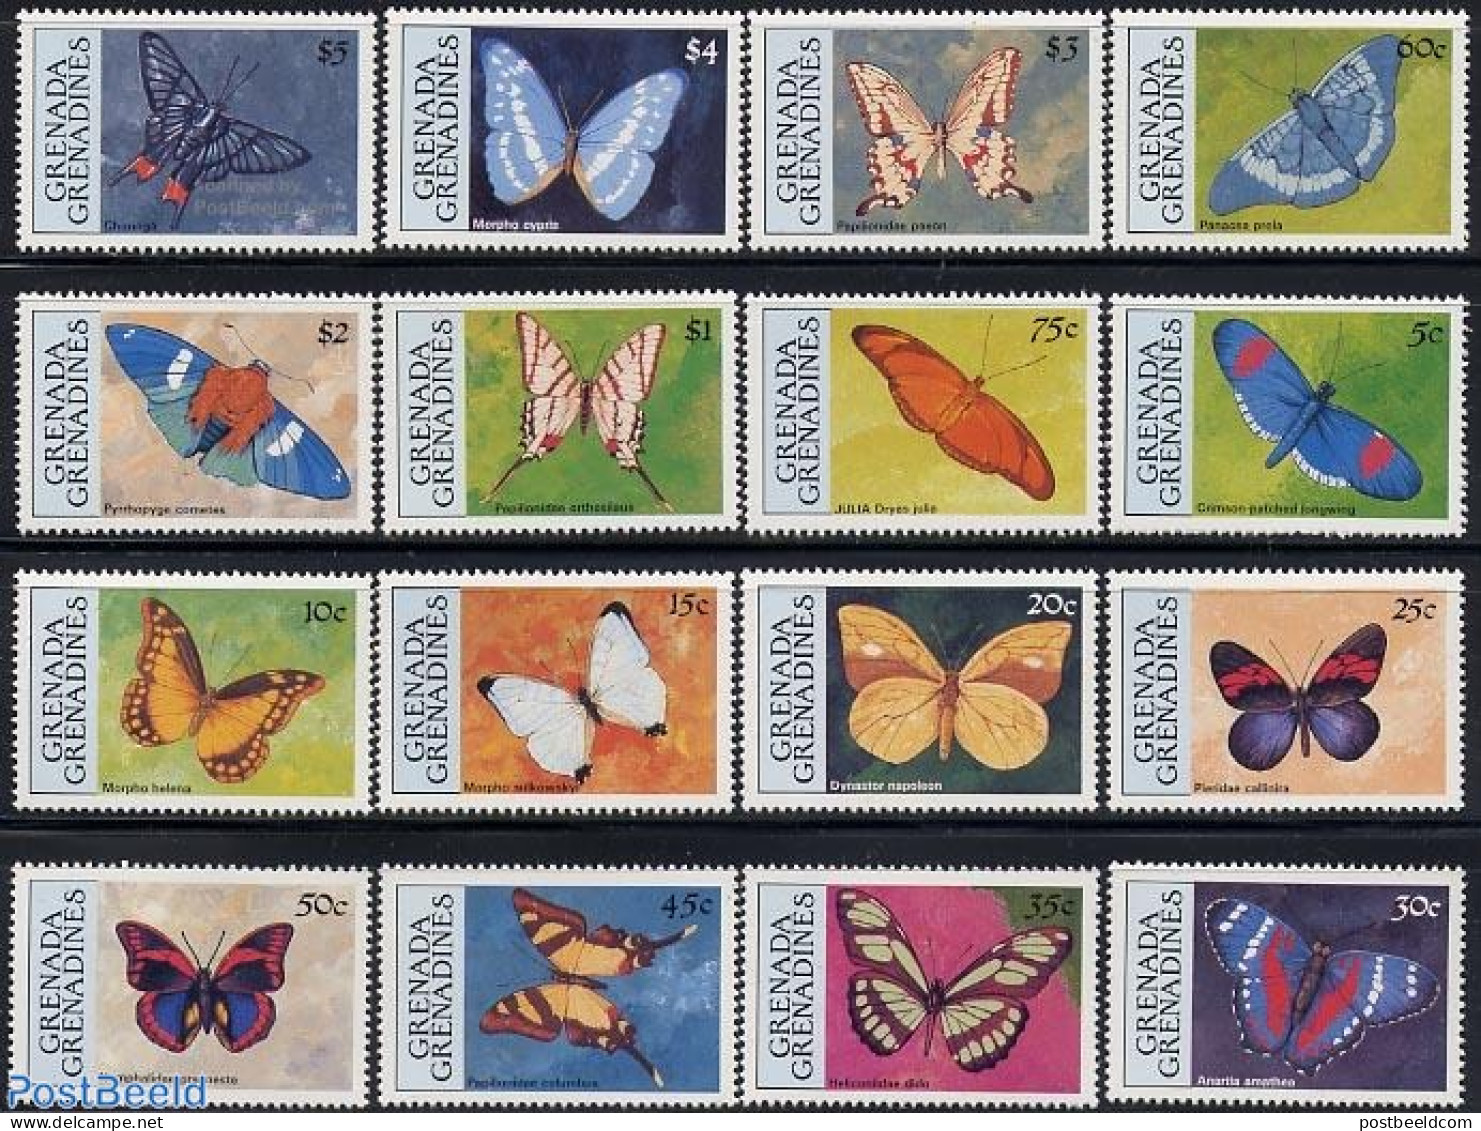 Grenada Grenadines 1991 Definitives, Butterflies 16v, Mint NH, Nature - Butterflies - Grenada (1974-...)